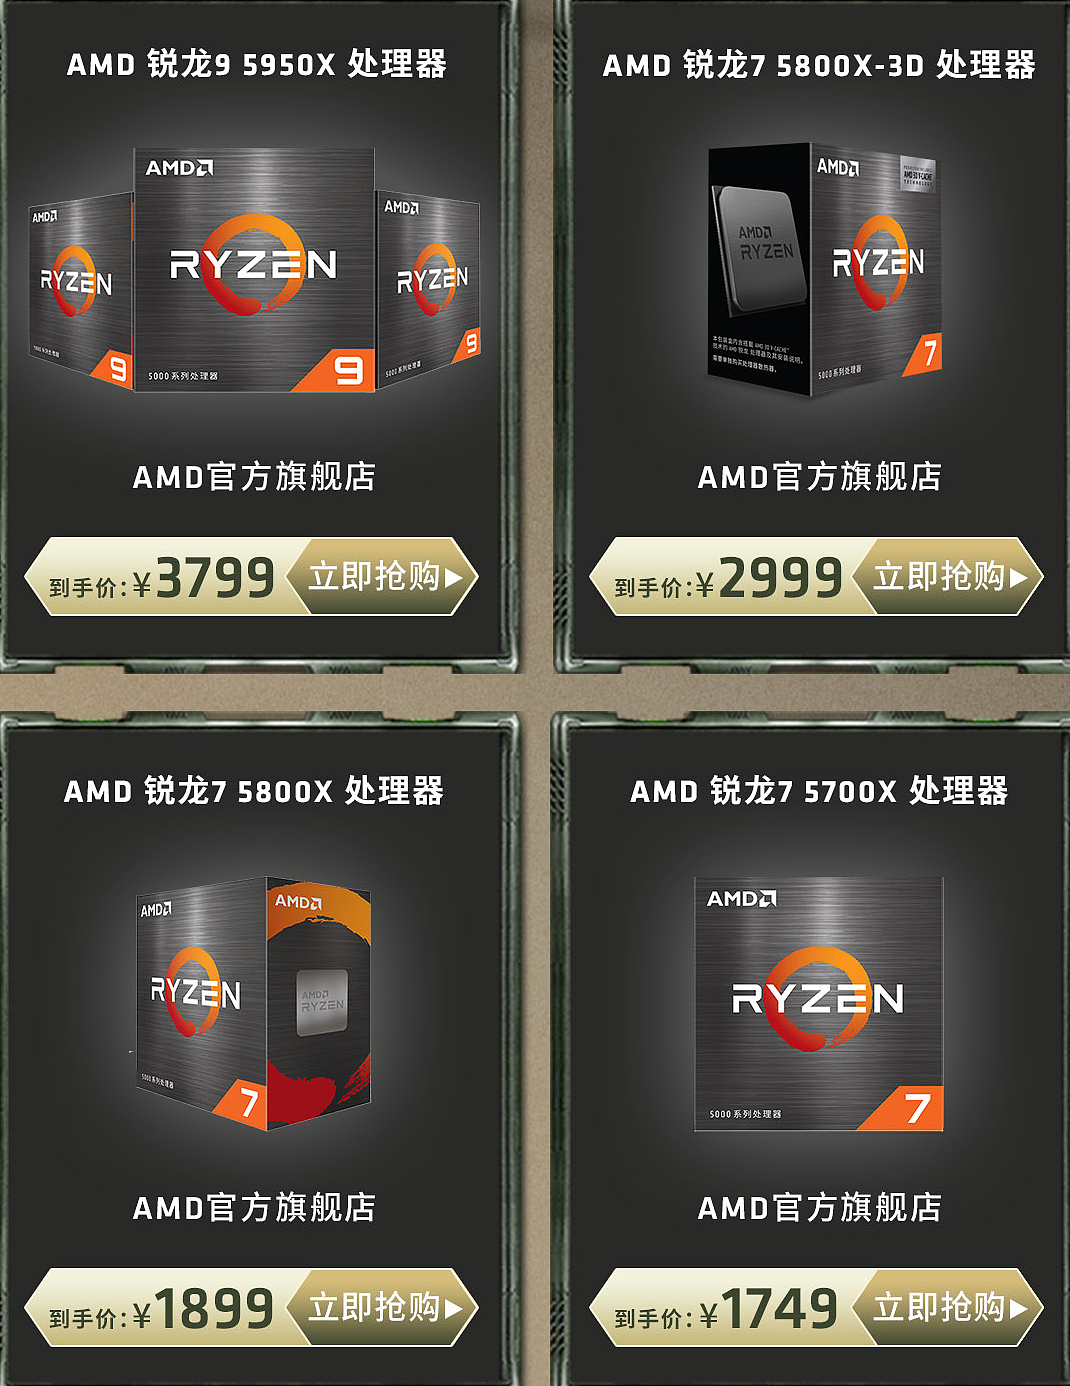 AMD 锐龙 5000 系列处理器再降价：16 核 5950X 3799 元，8 核 5700X 1749 元 - 1